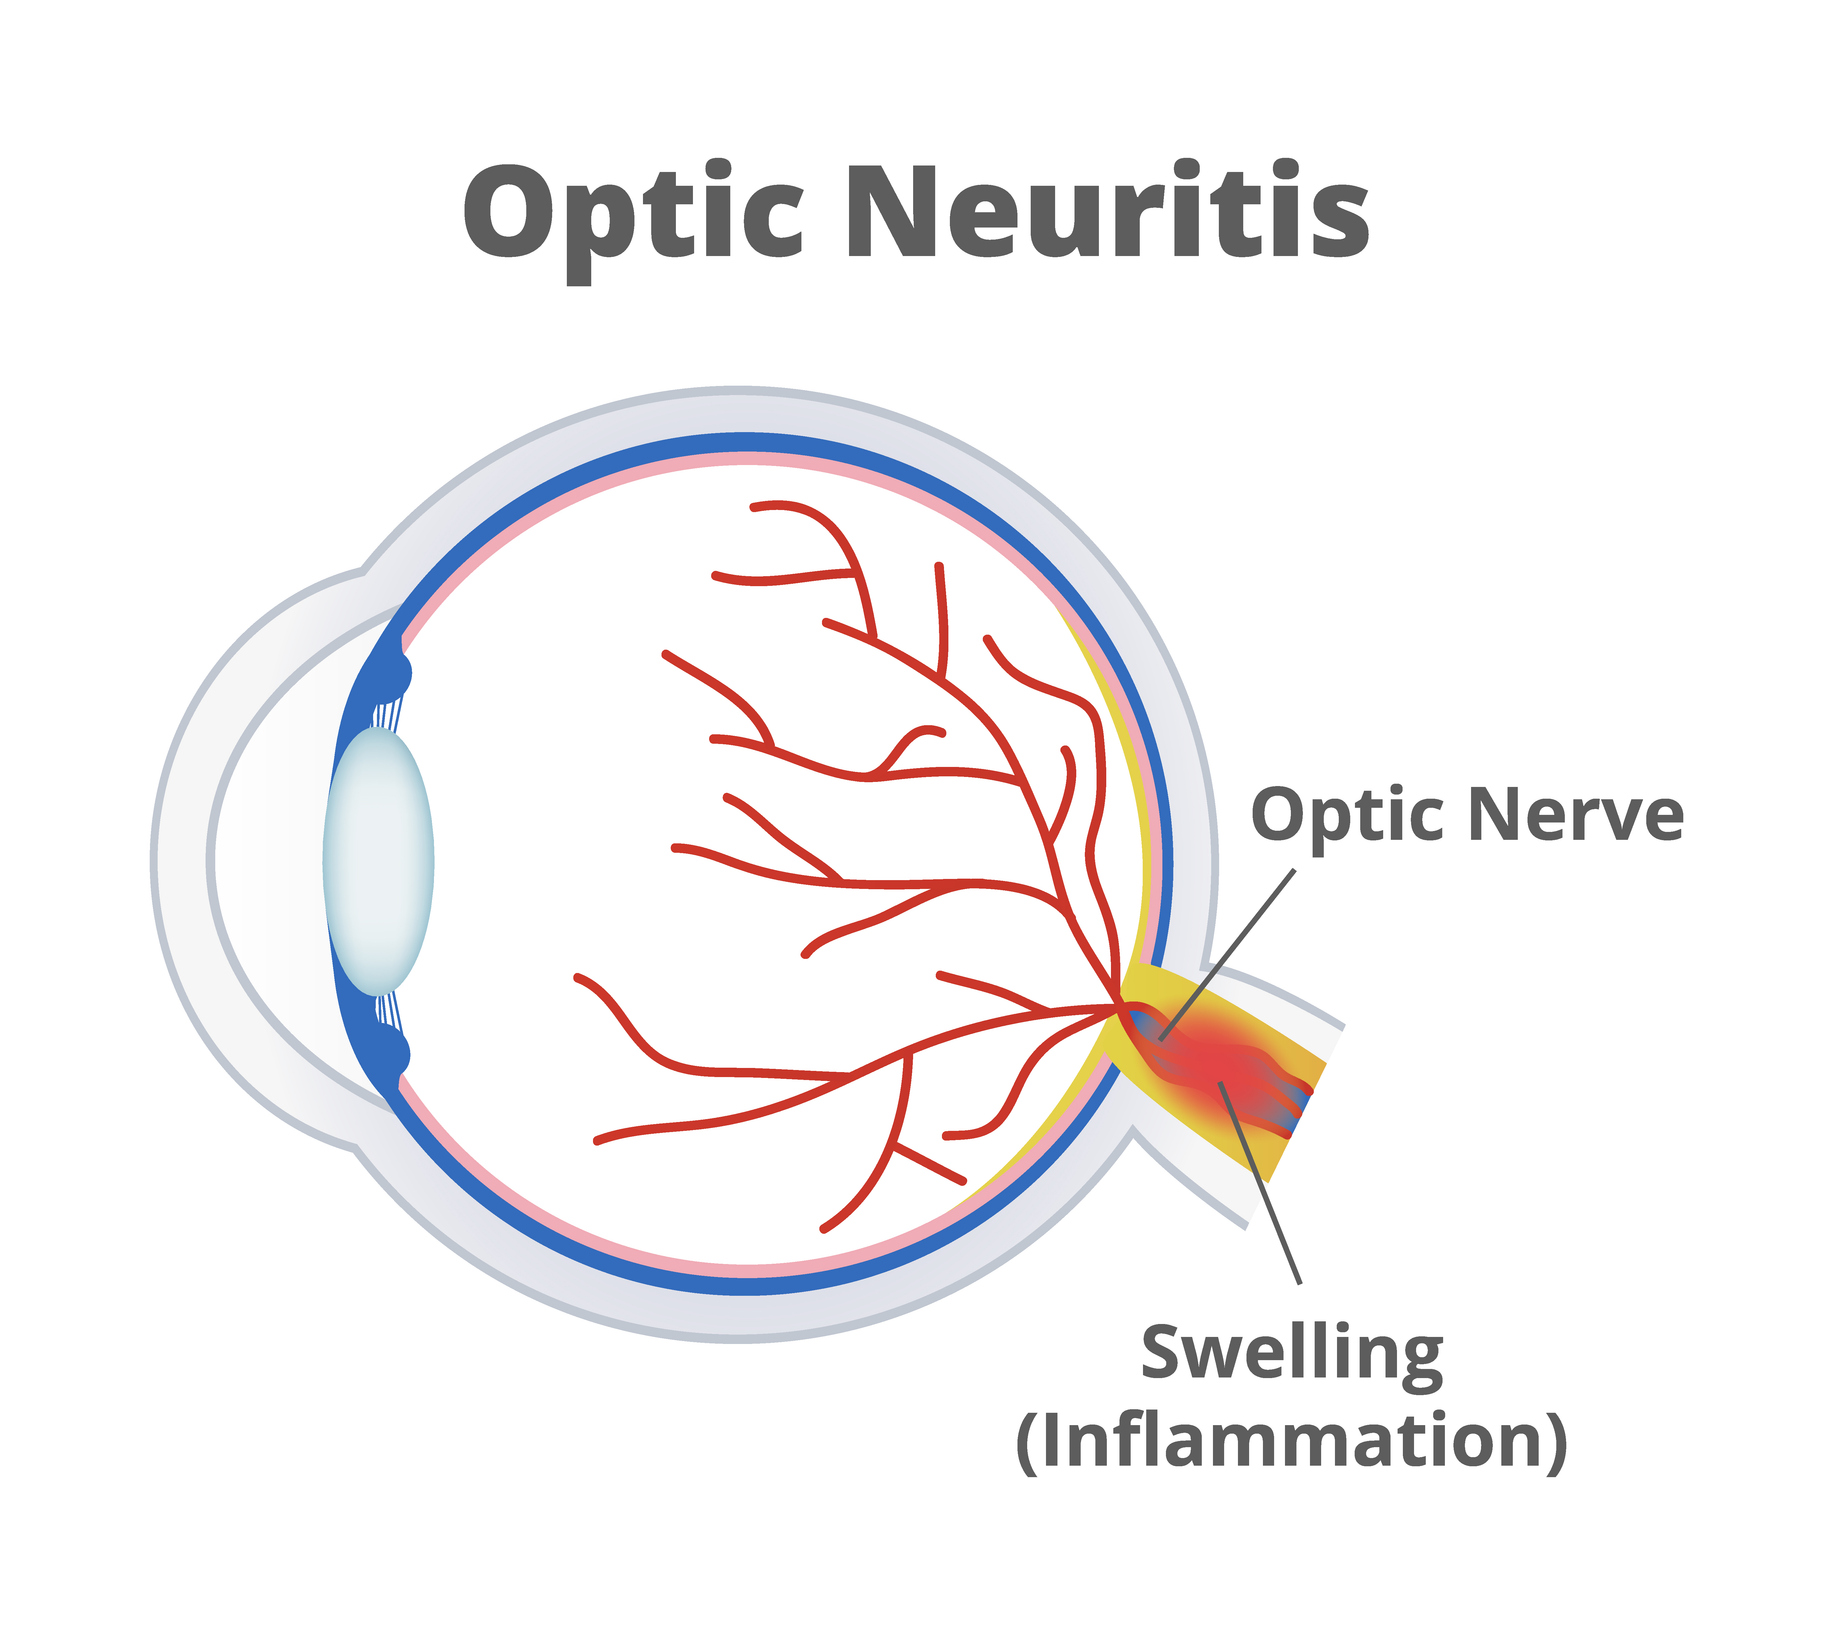 Ocular Myasthenia Gravis: Symptoms and Diagnosis